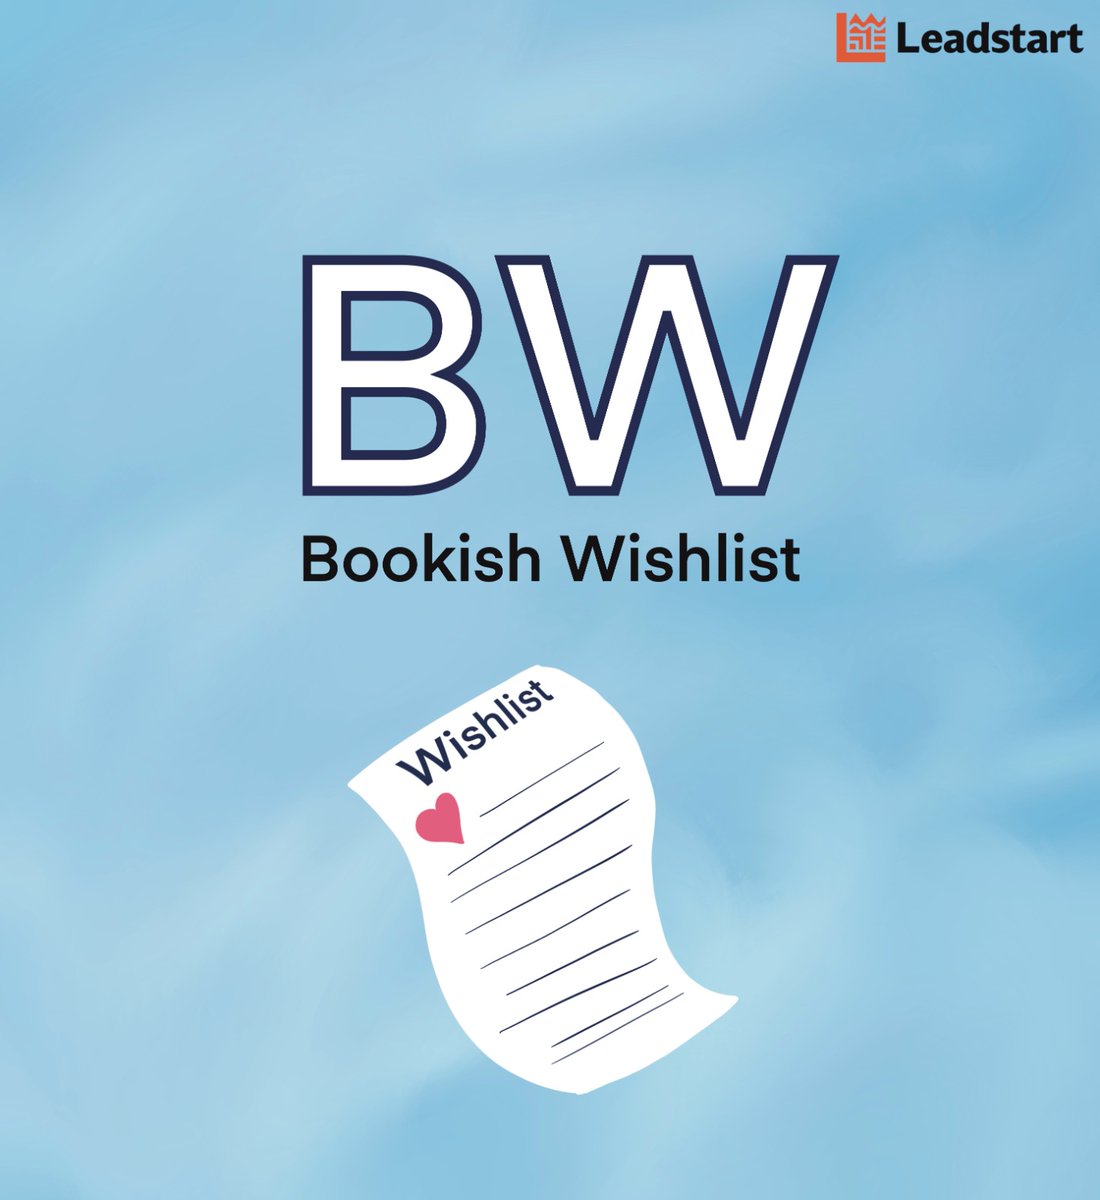 Tell us what's on your wishlist!!

#Leadstart #newbook #newread #bookofthemonth #readofthemonth #newpost #trending #bookaholic #booktoread #bookgoals